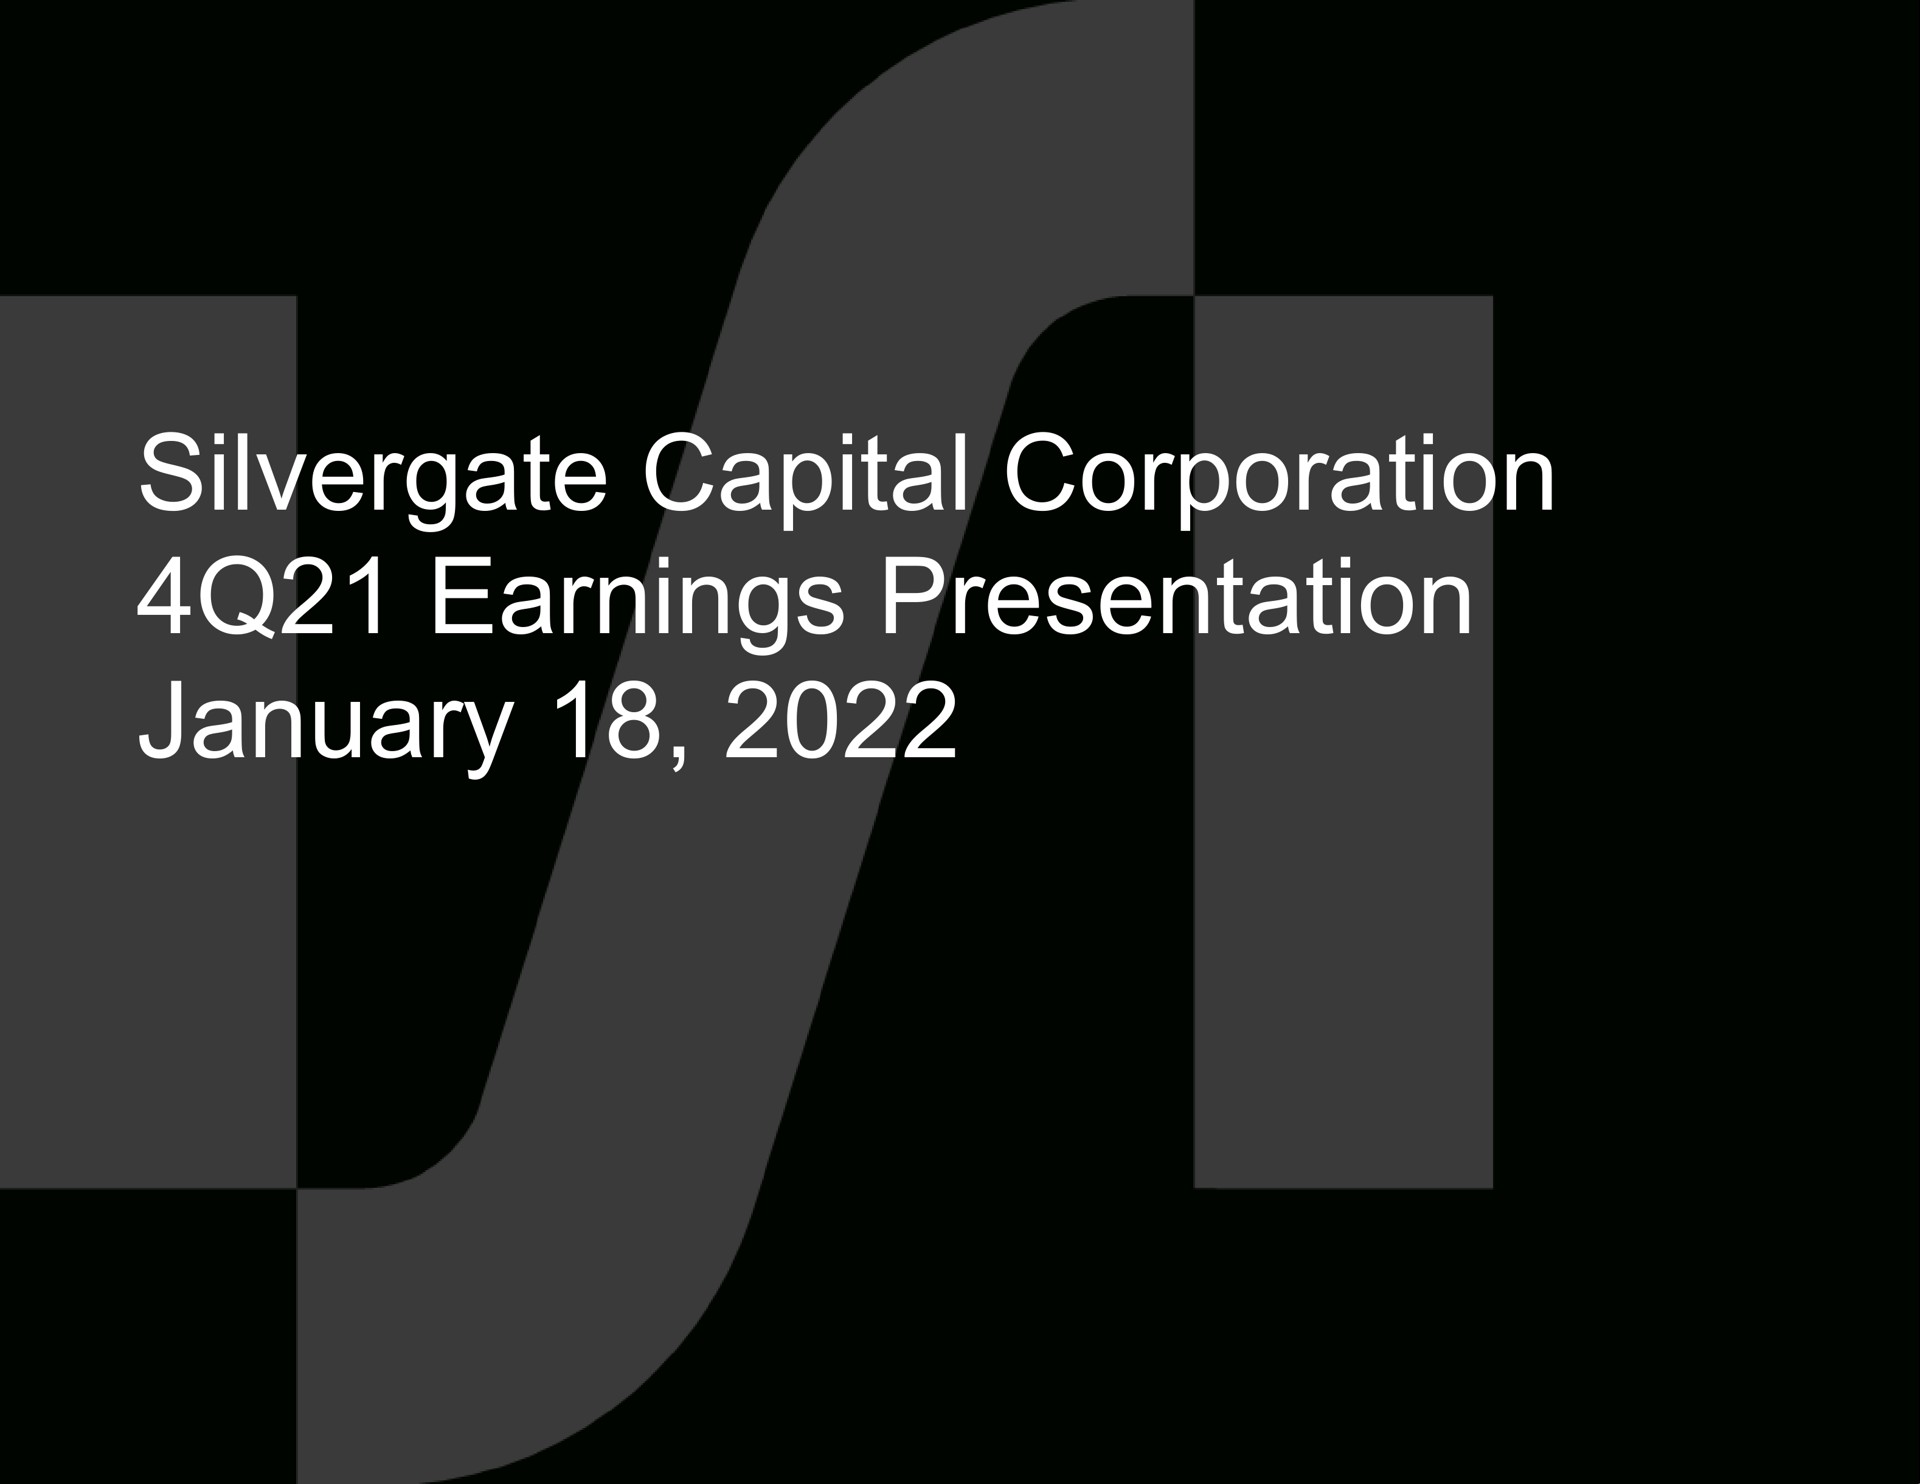 exhibit capital corporation earnings presentation | Silvergate Bank